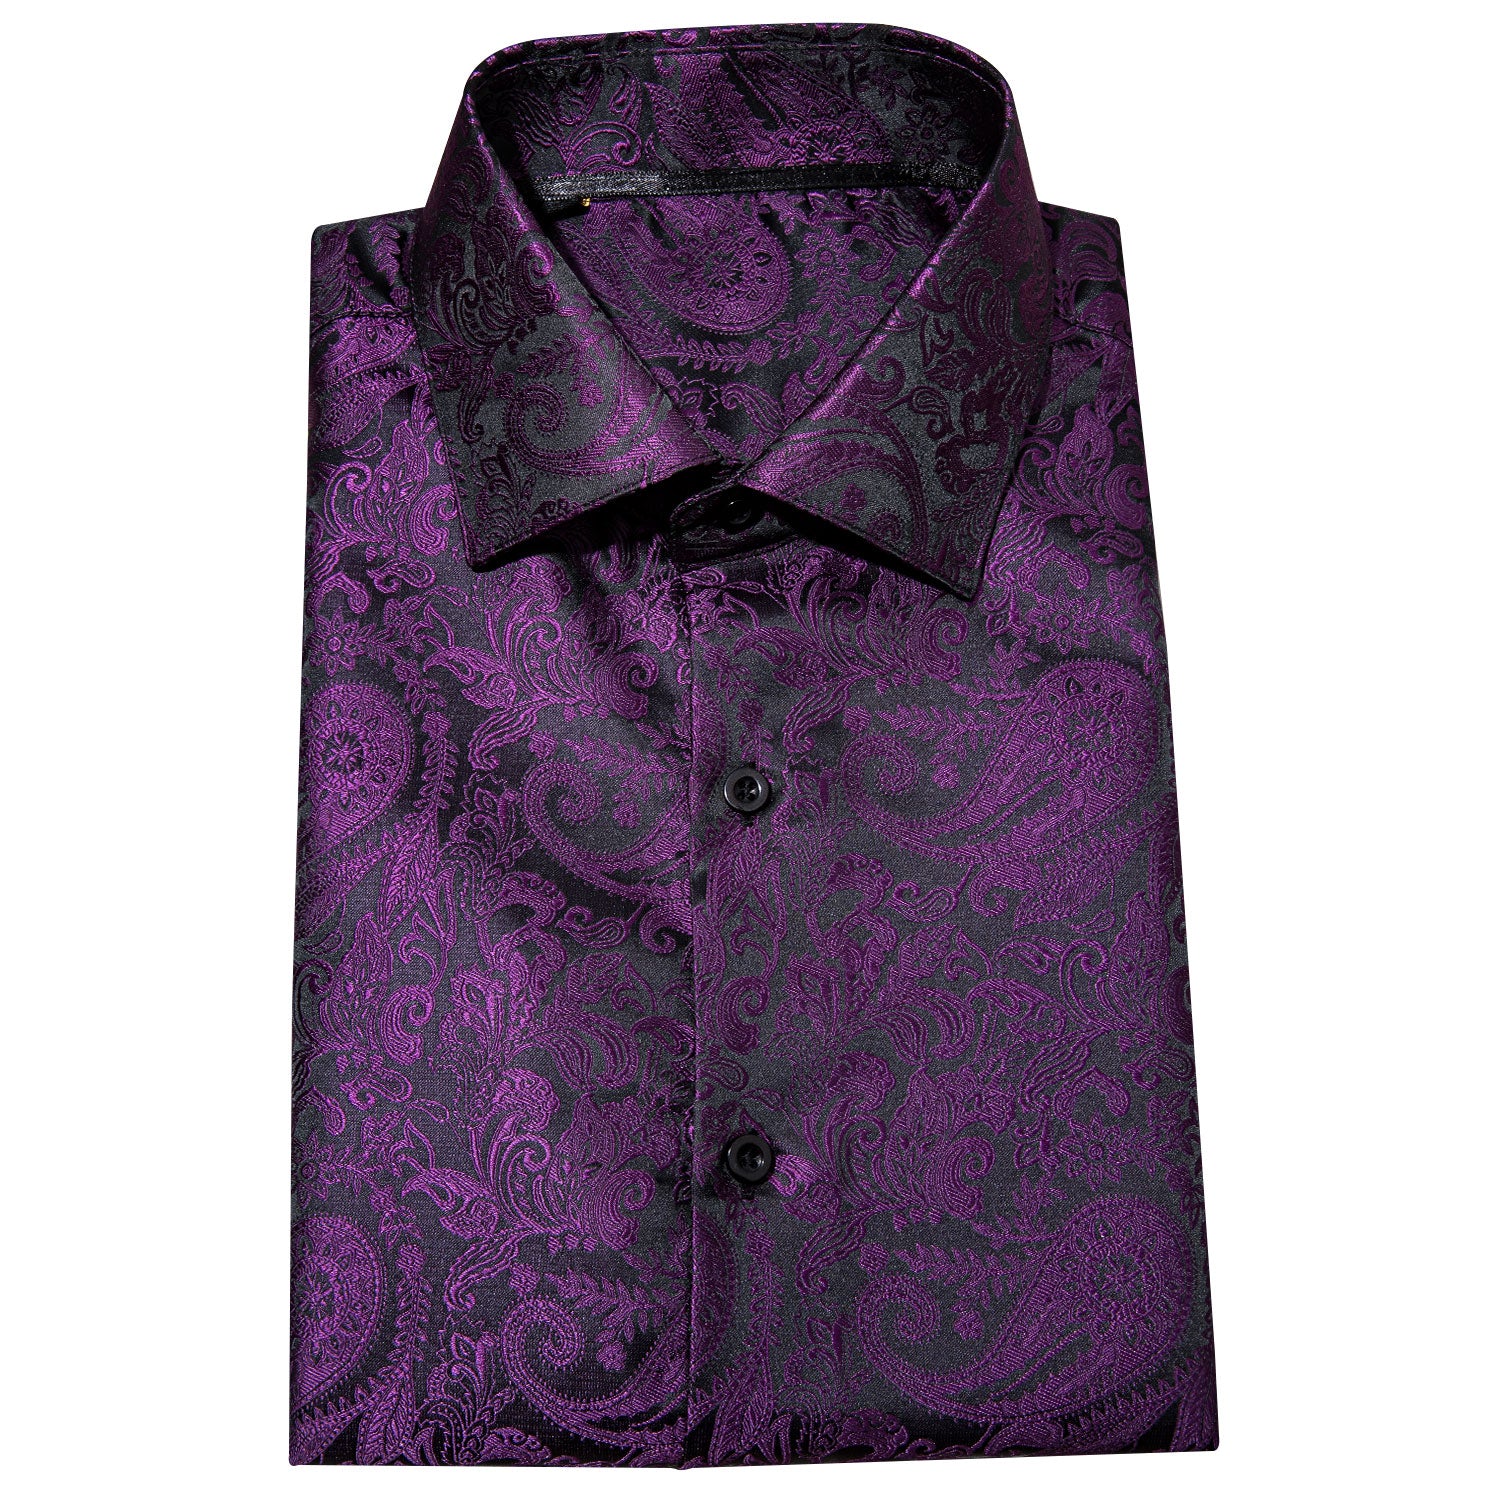 Winsdor collar black purple floral shirt